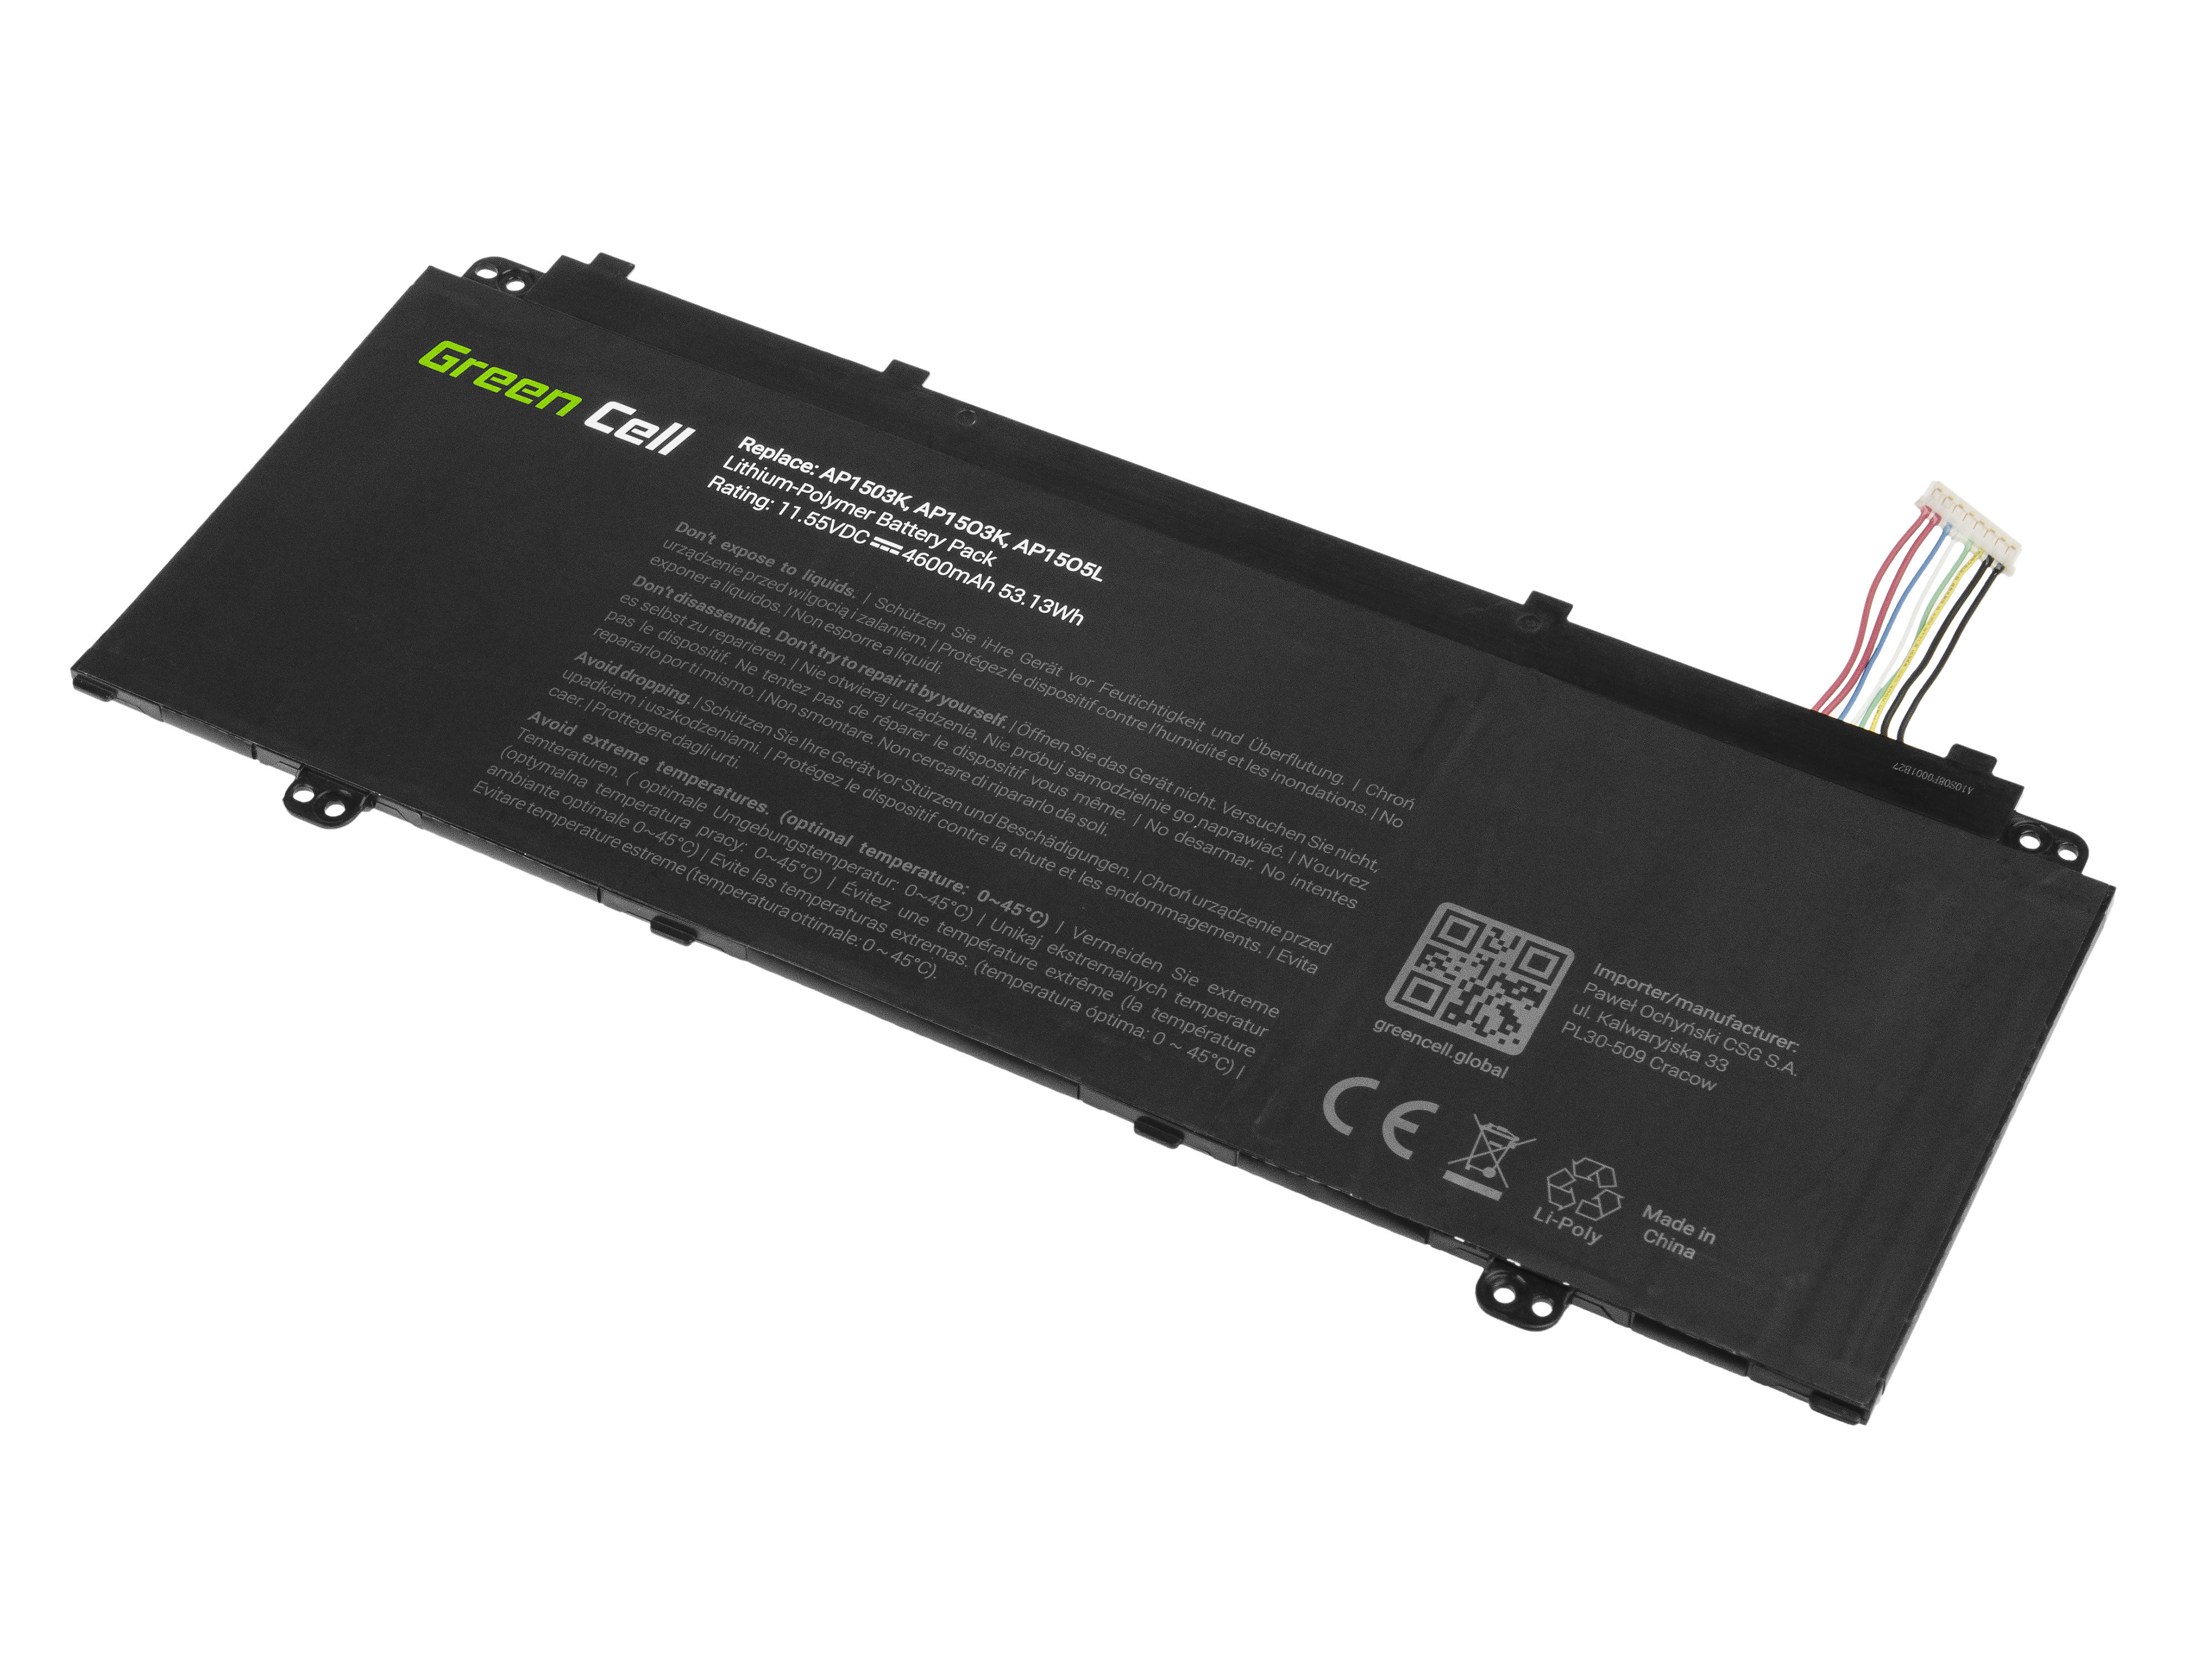 Green Cell AC56 Baterie Acer AP1503K/AP1505L/AP15O3K/AP15O5L/Aspire S13/Swift 5 4600mAh Li-Pol – neoriginální